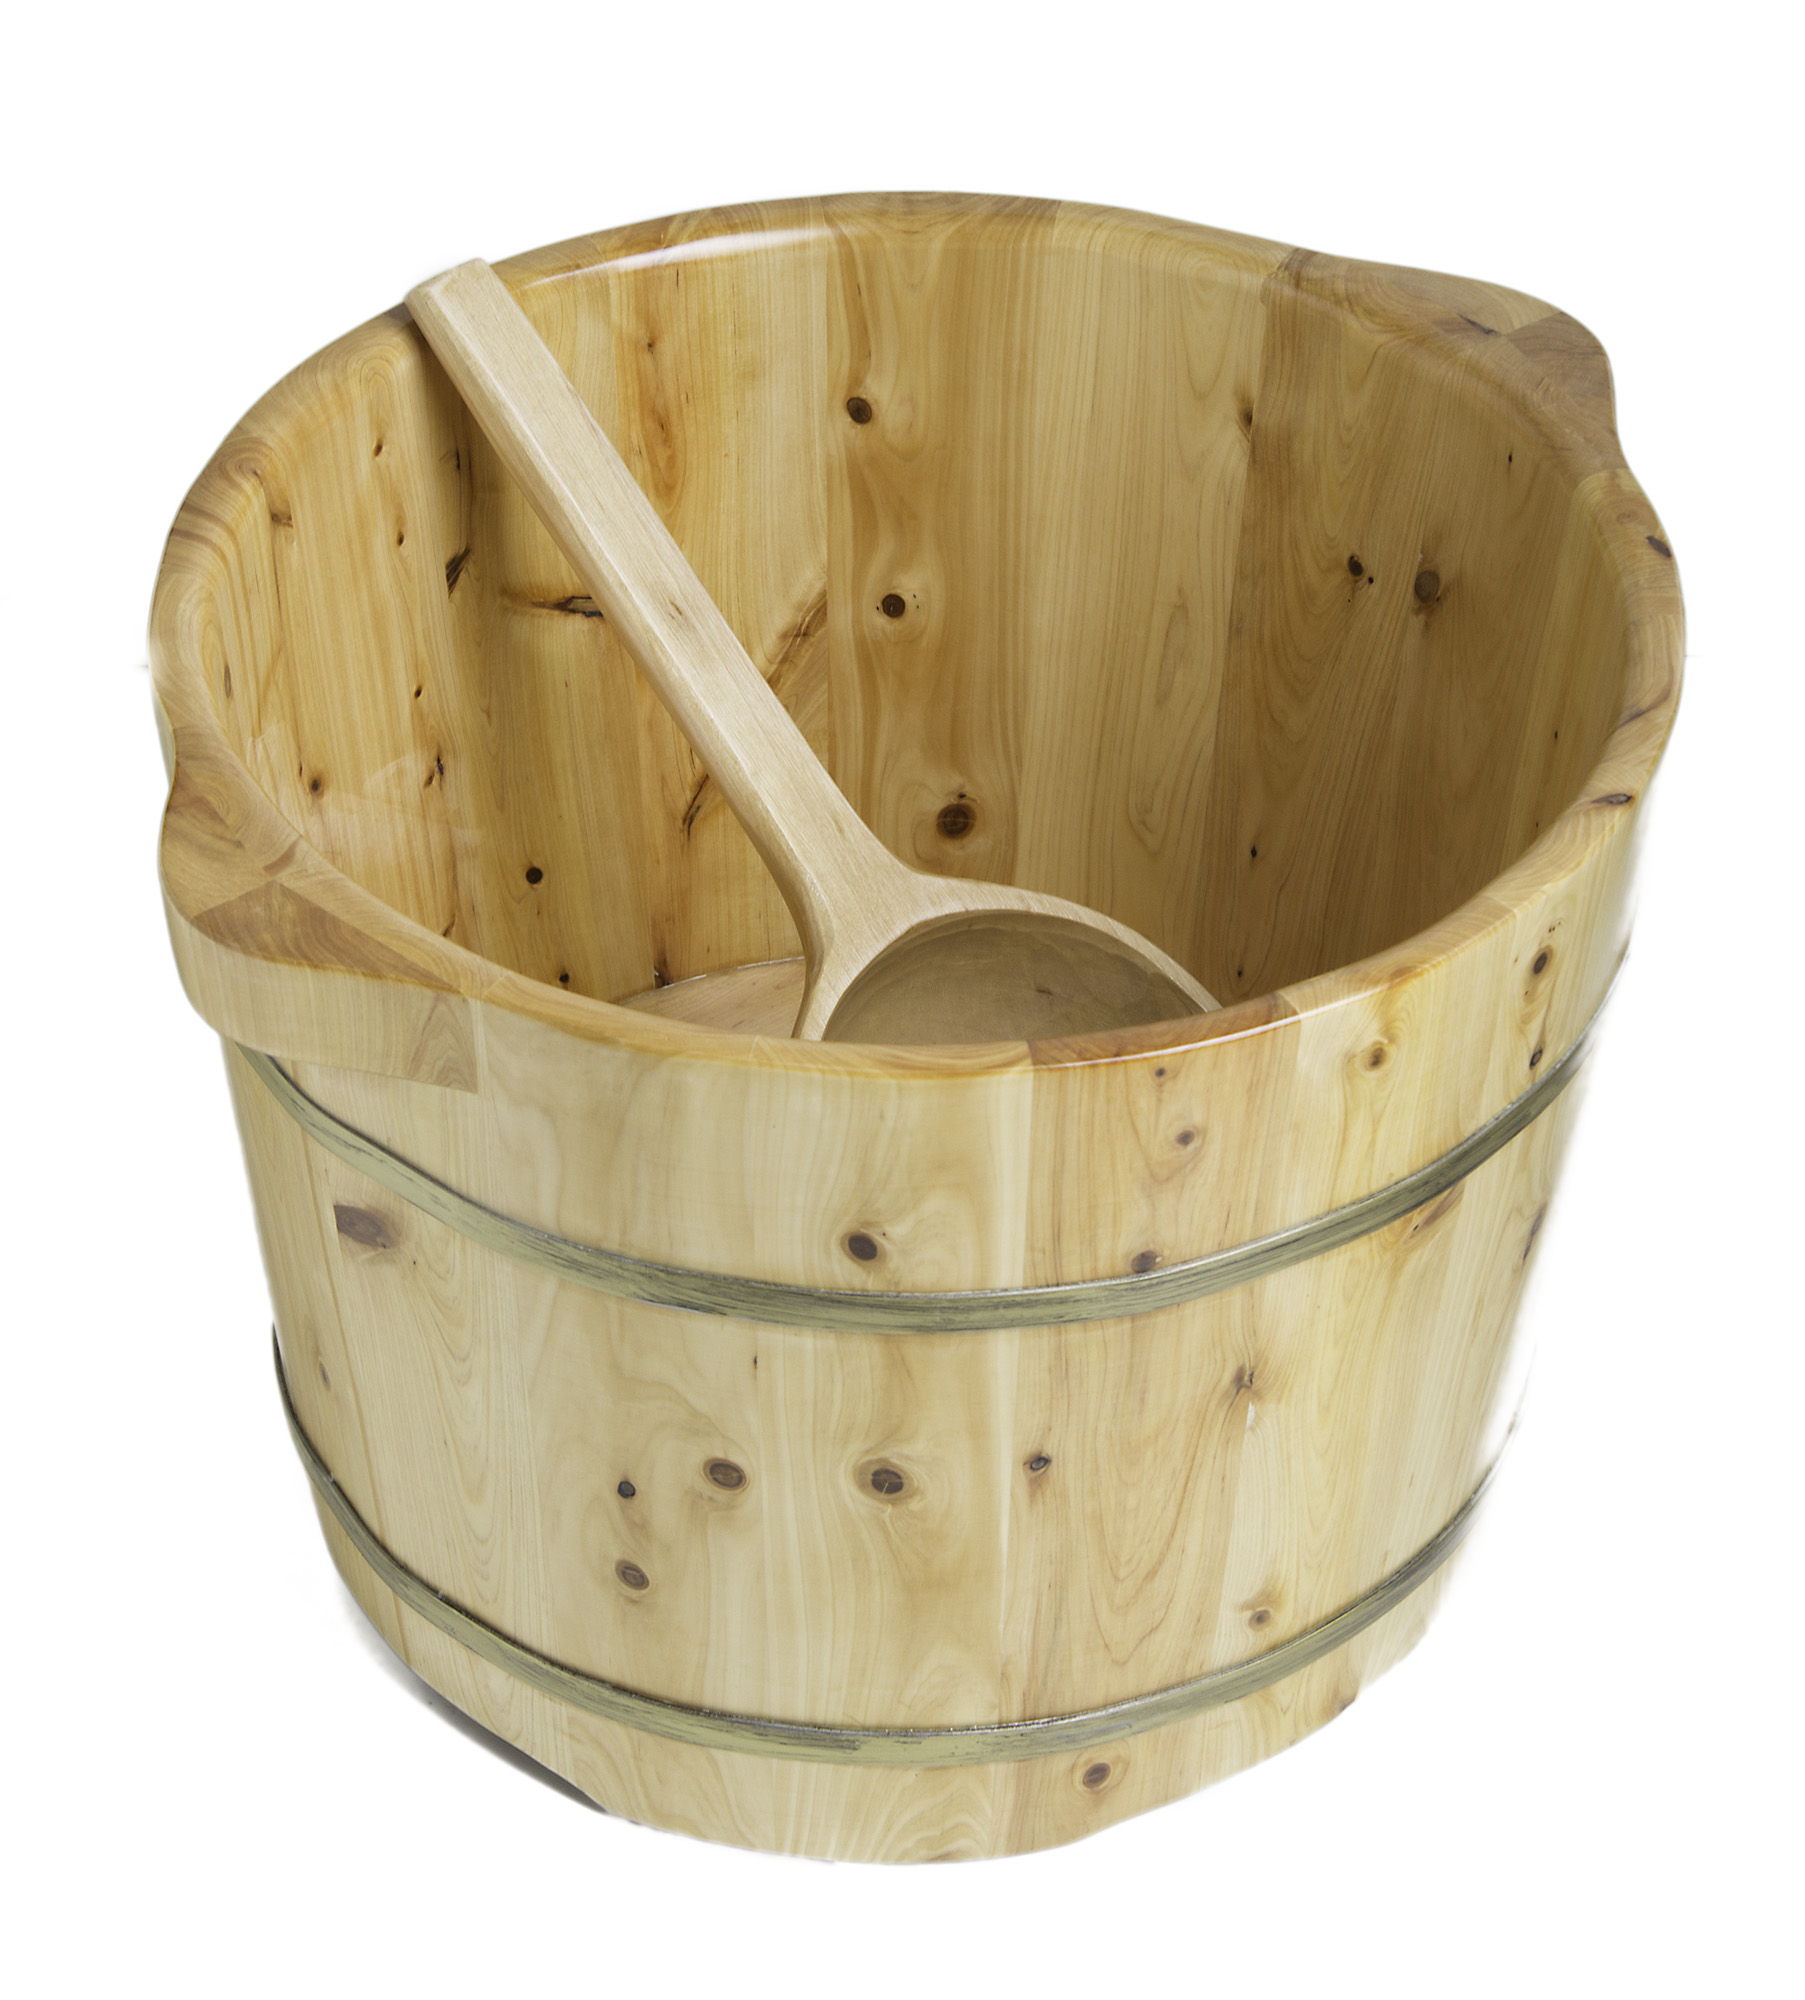 Ab6604 15 In. Solid Cedar Wood Foot Soaking Barrel Bucket With Matching Spoon - Natural Wood